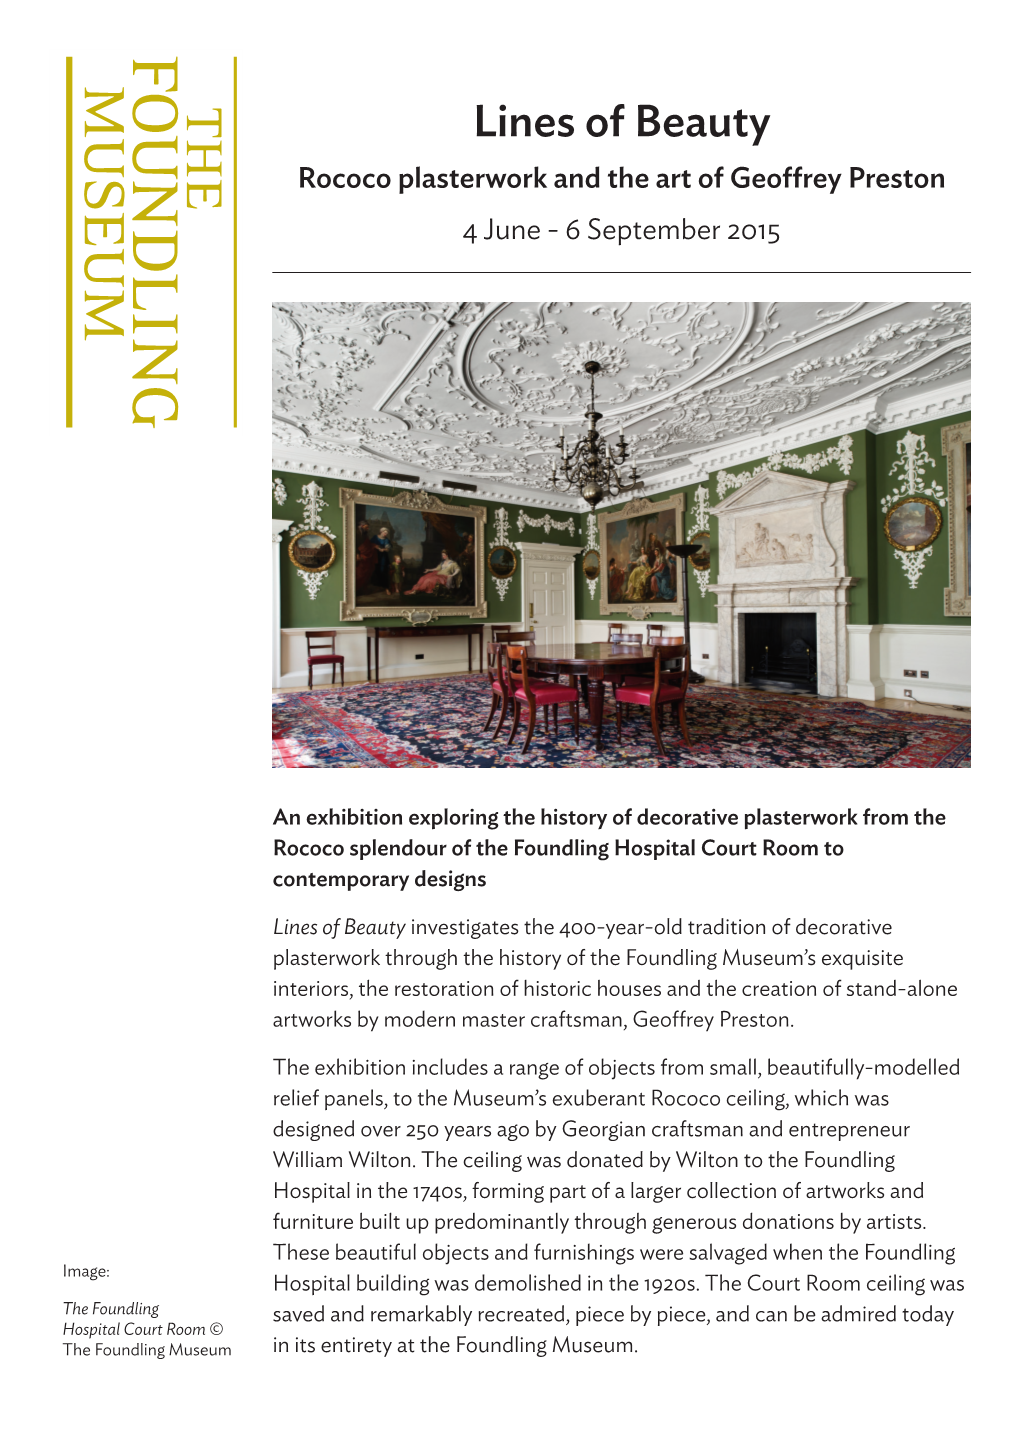 Lines of Beauty Rococo Plasterwork and the Art of Geoffrey Preston 4 June - 6 September 2015